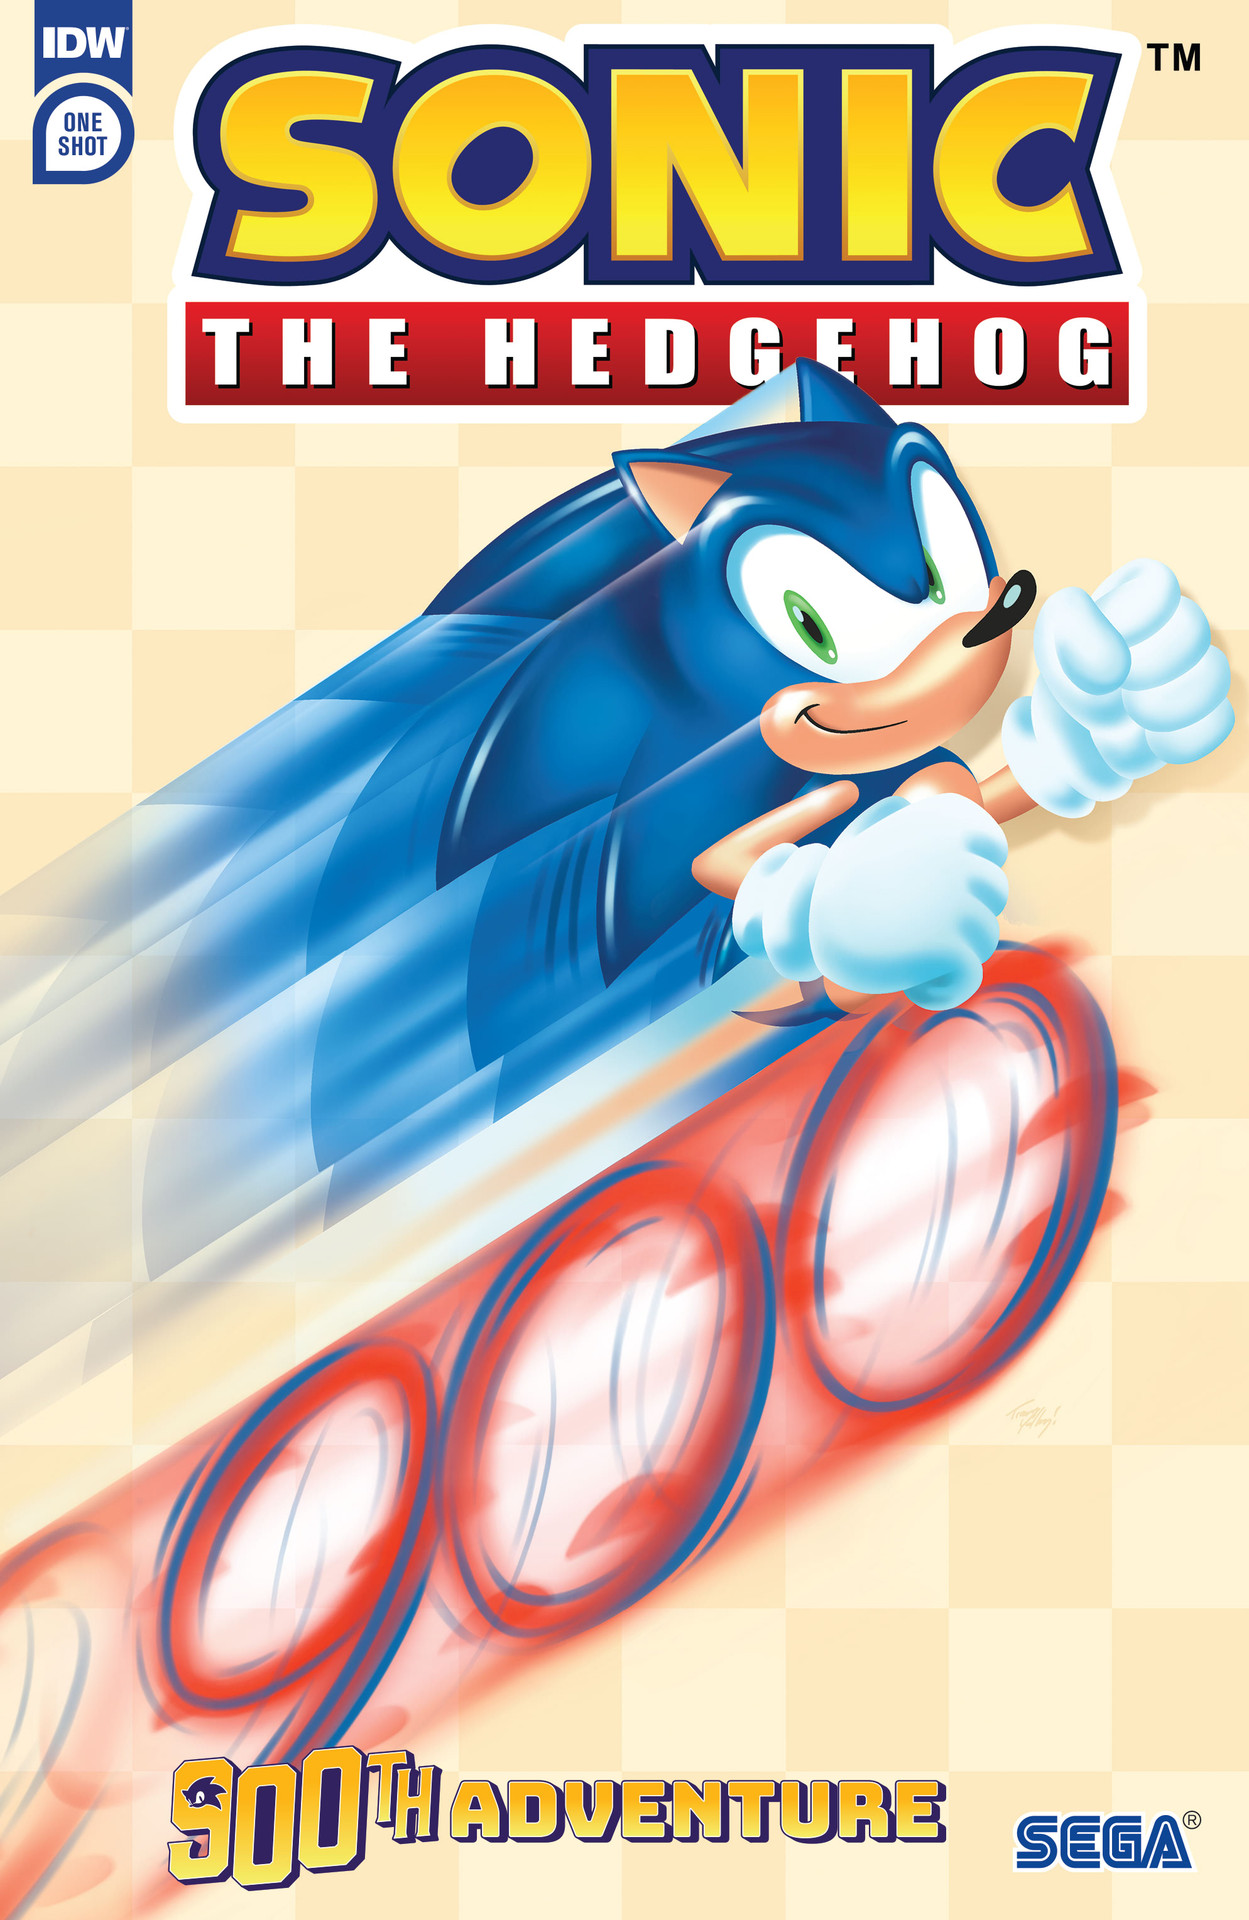 Metal Sonic vs Shadow the Hedgehog (grace)